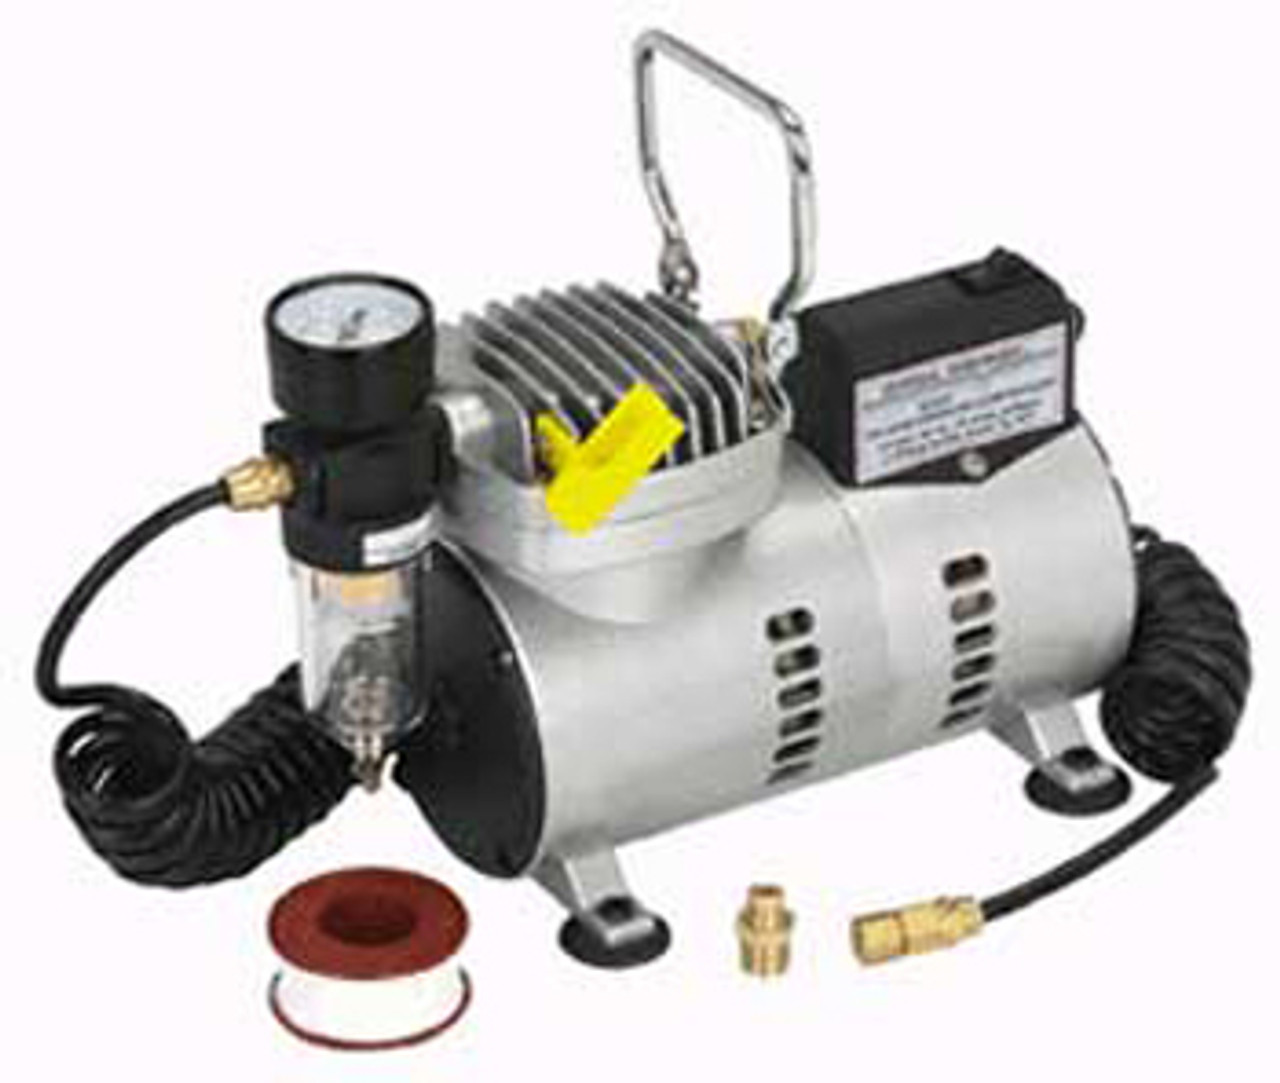 Central Pneumatic OilLess Airbrush Compressor w/Gauge & Filter